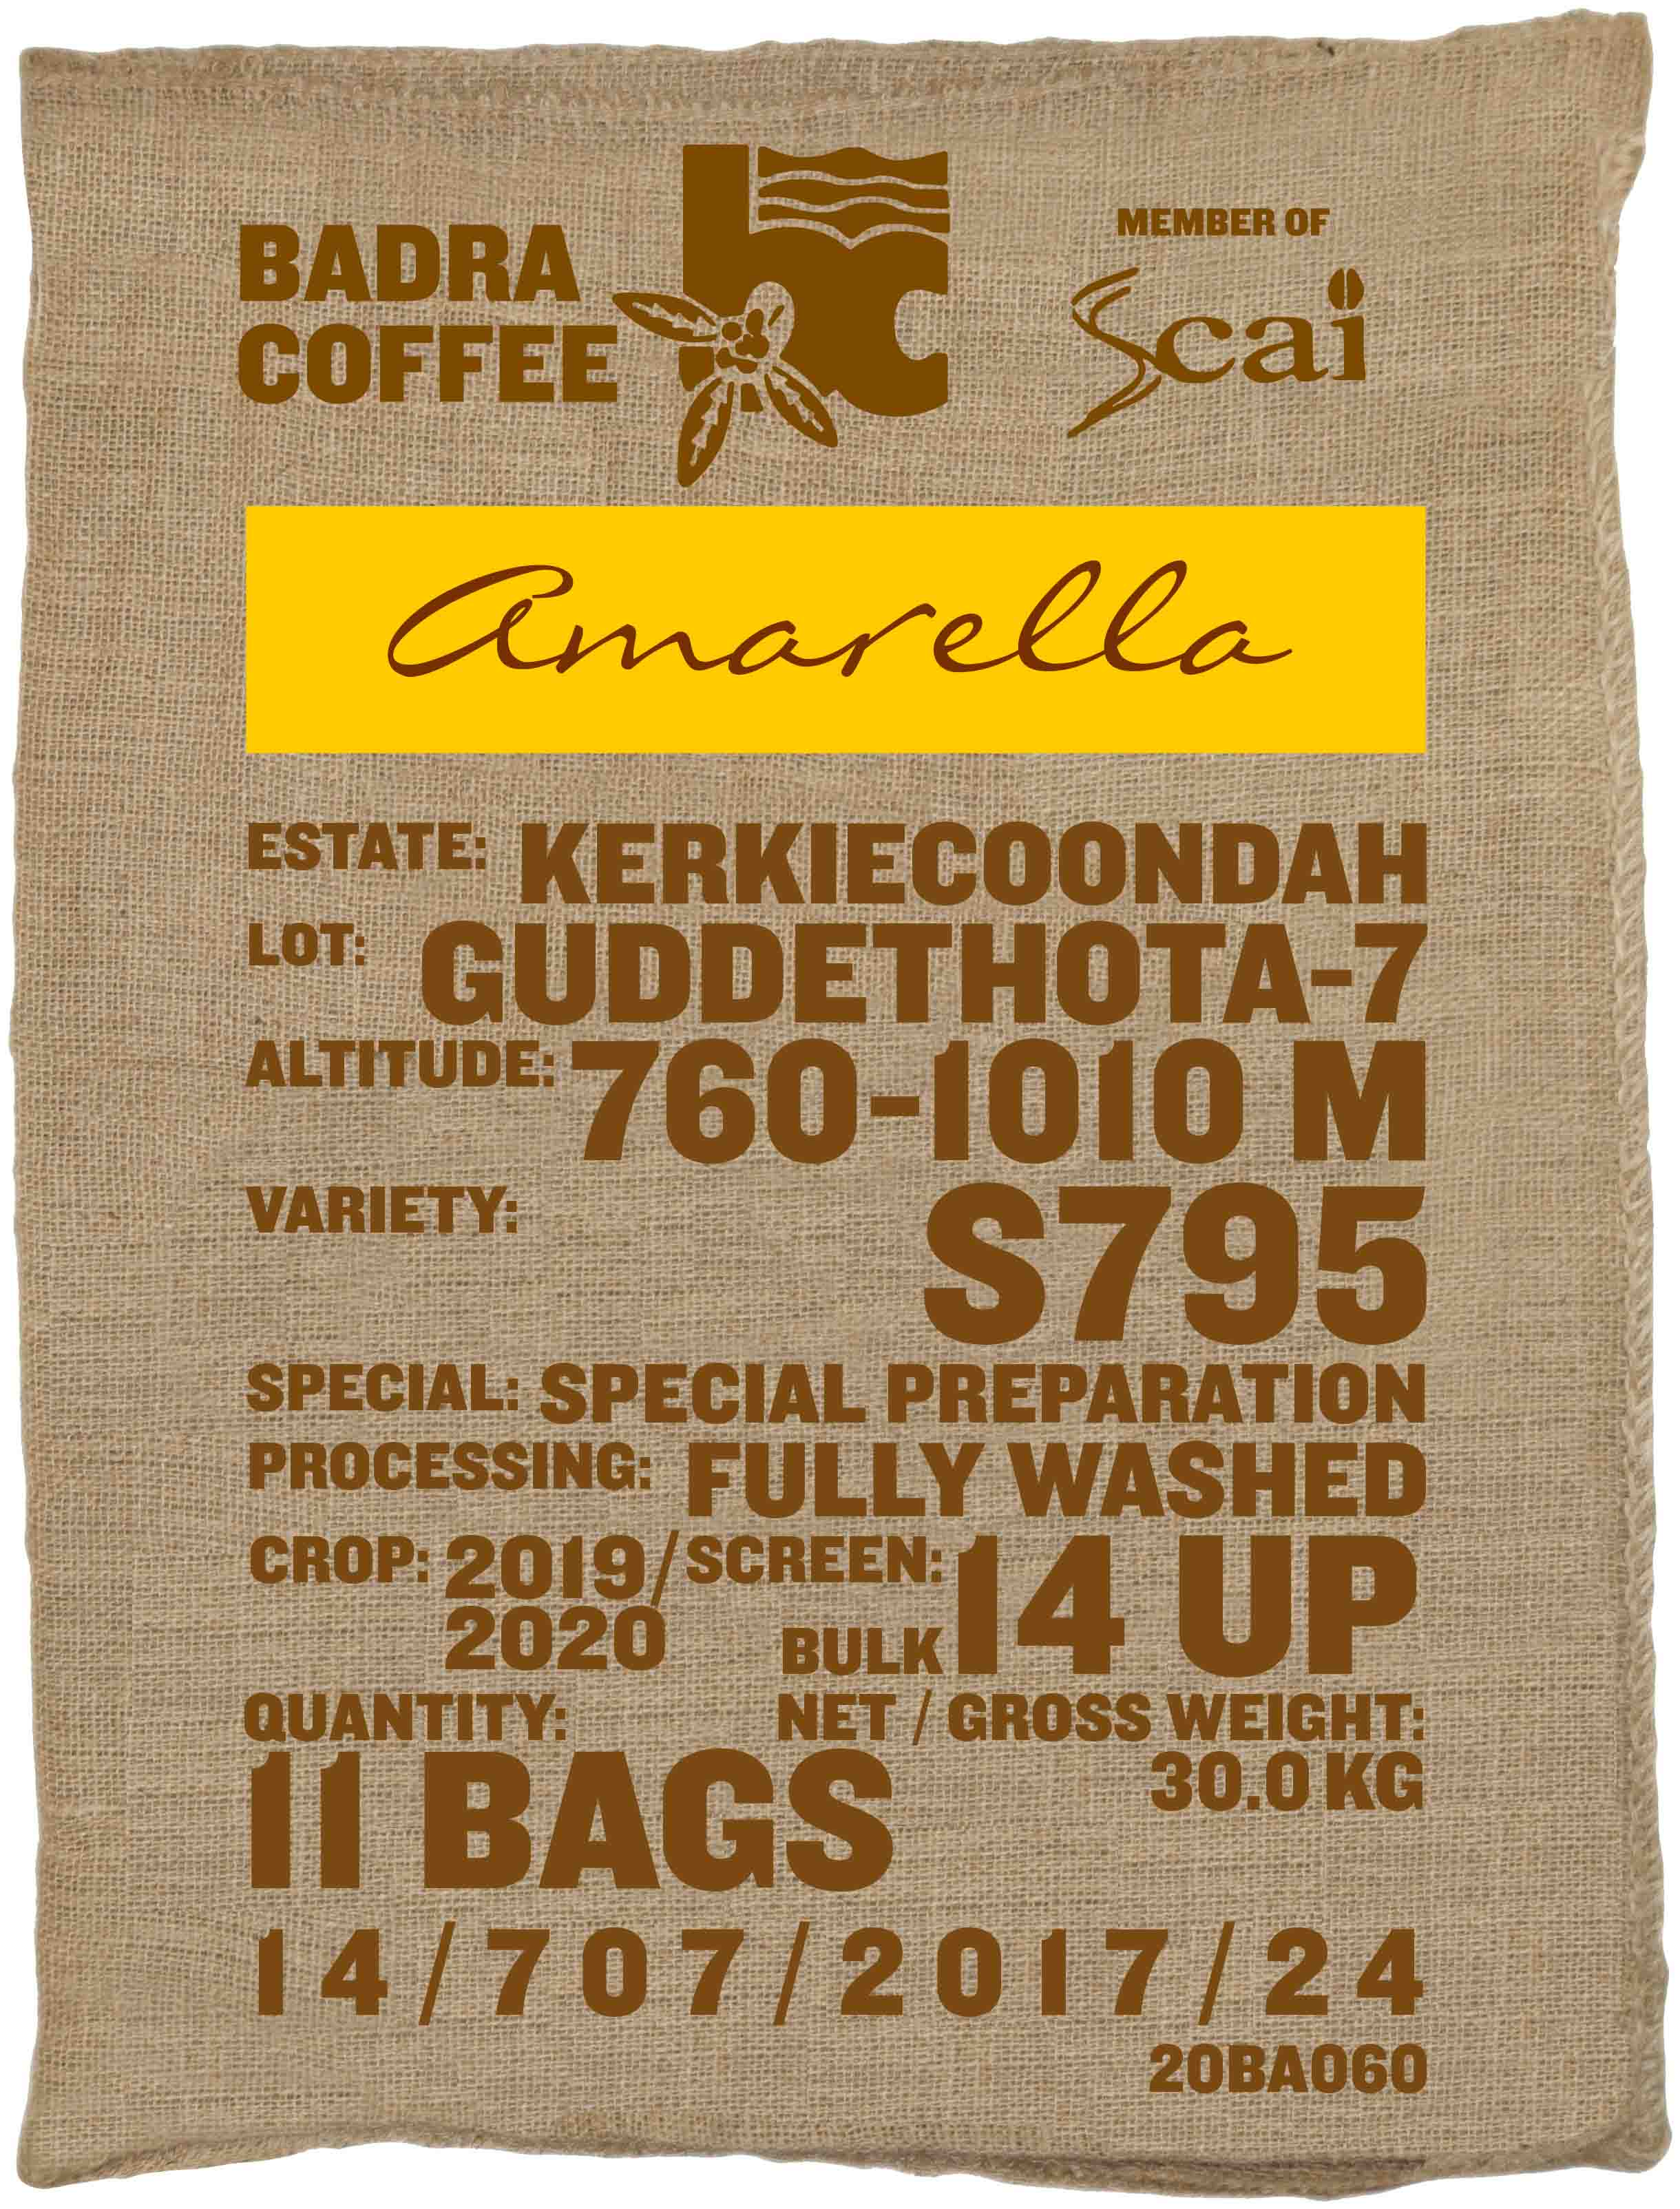 Ein Rohkaffeesack amarella Parzellenkaffee Varietät S795. Badra Estates Lot Guddethota 7.